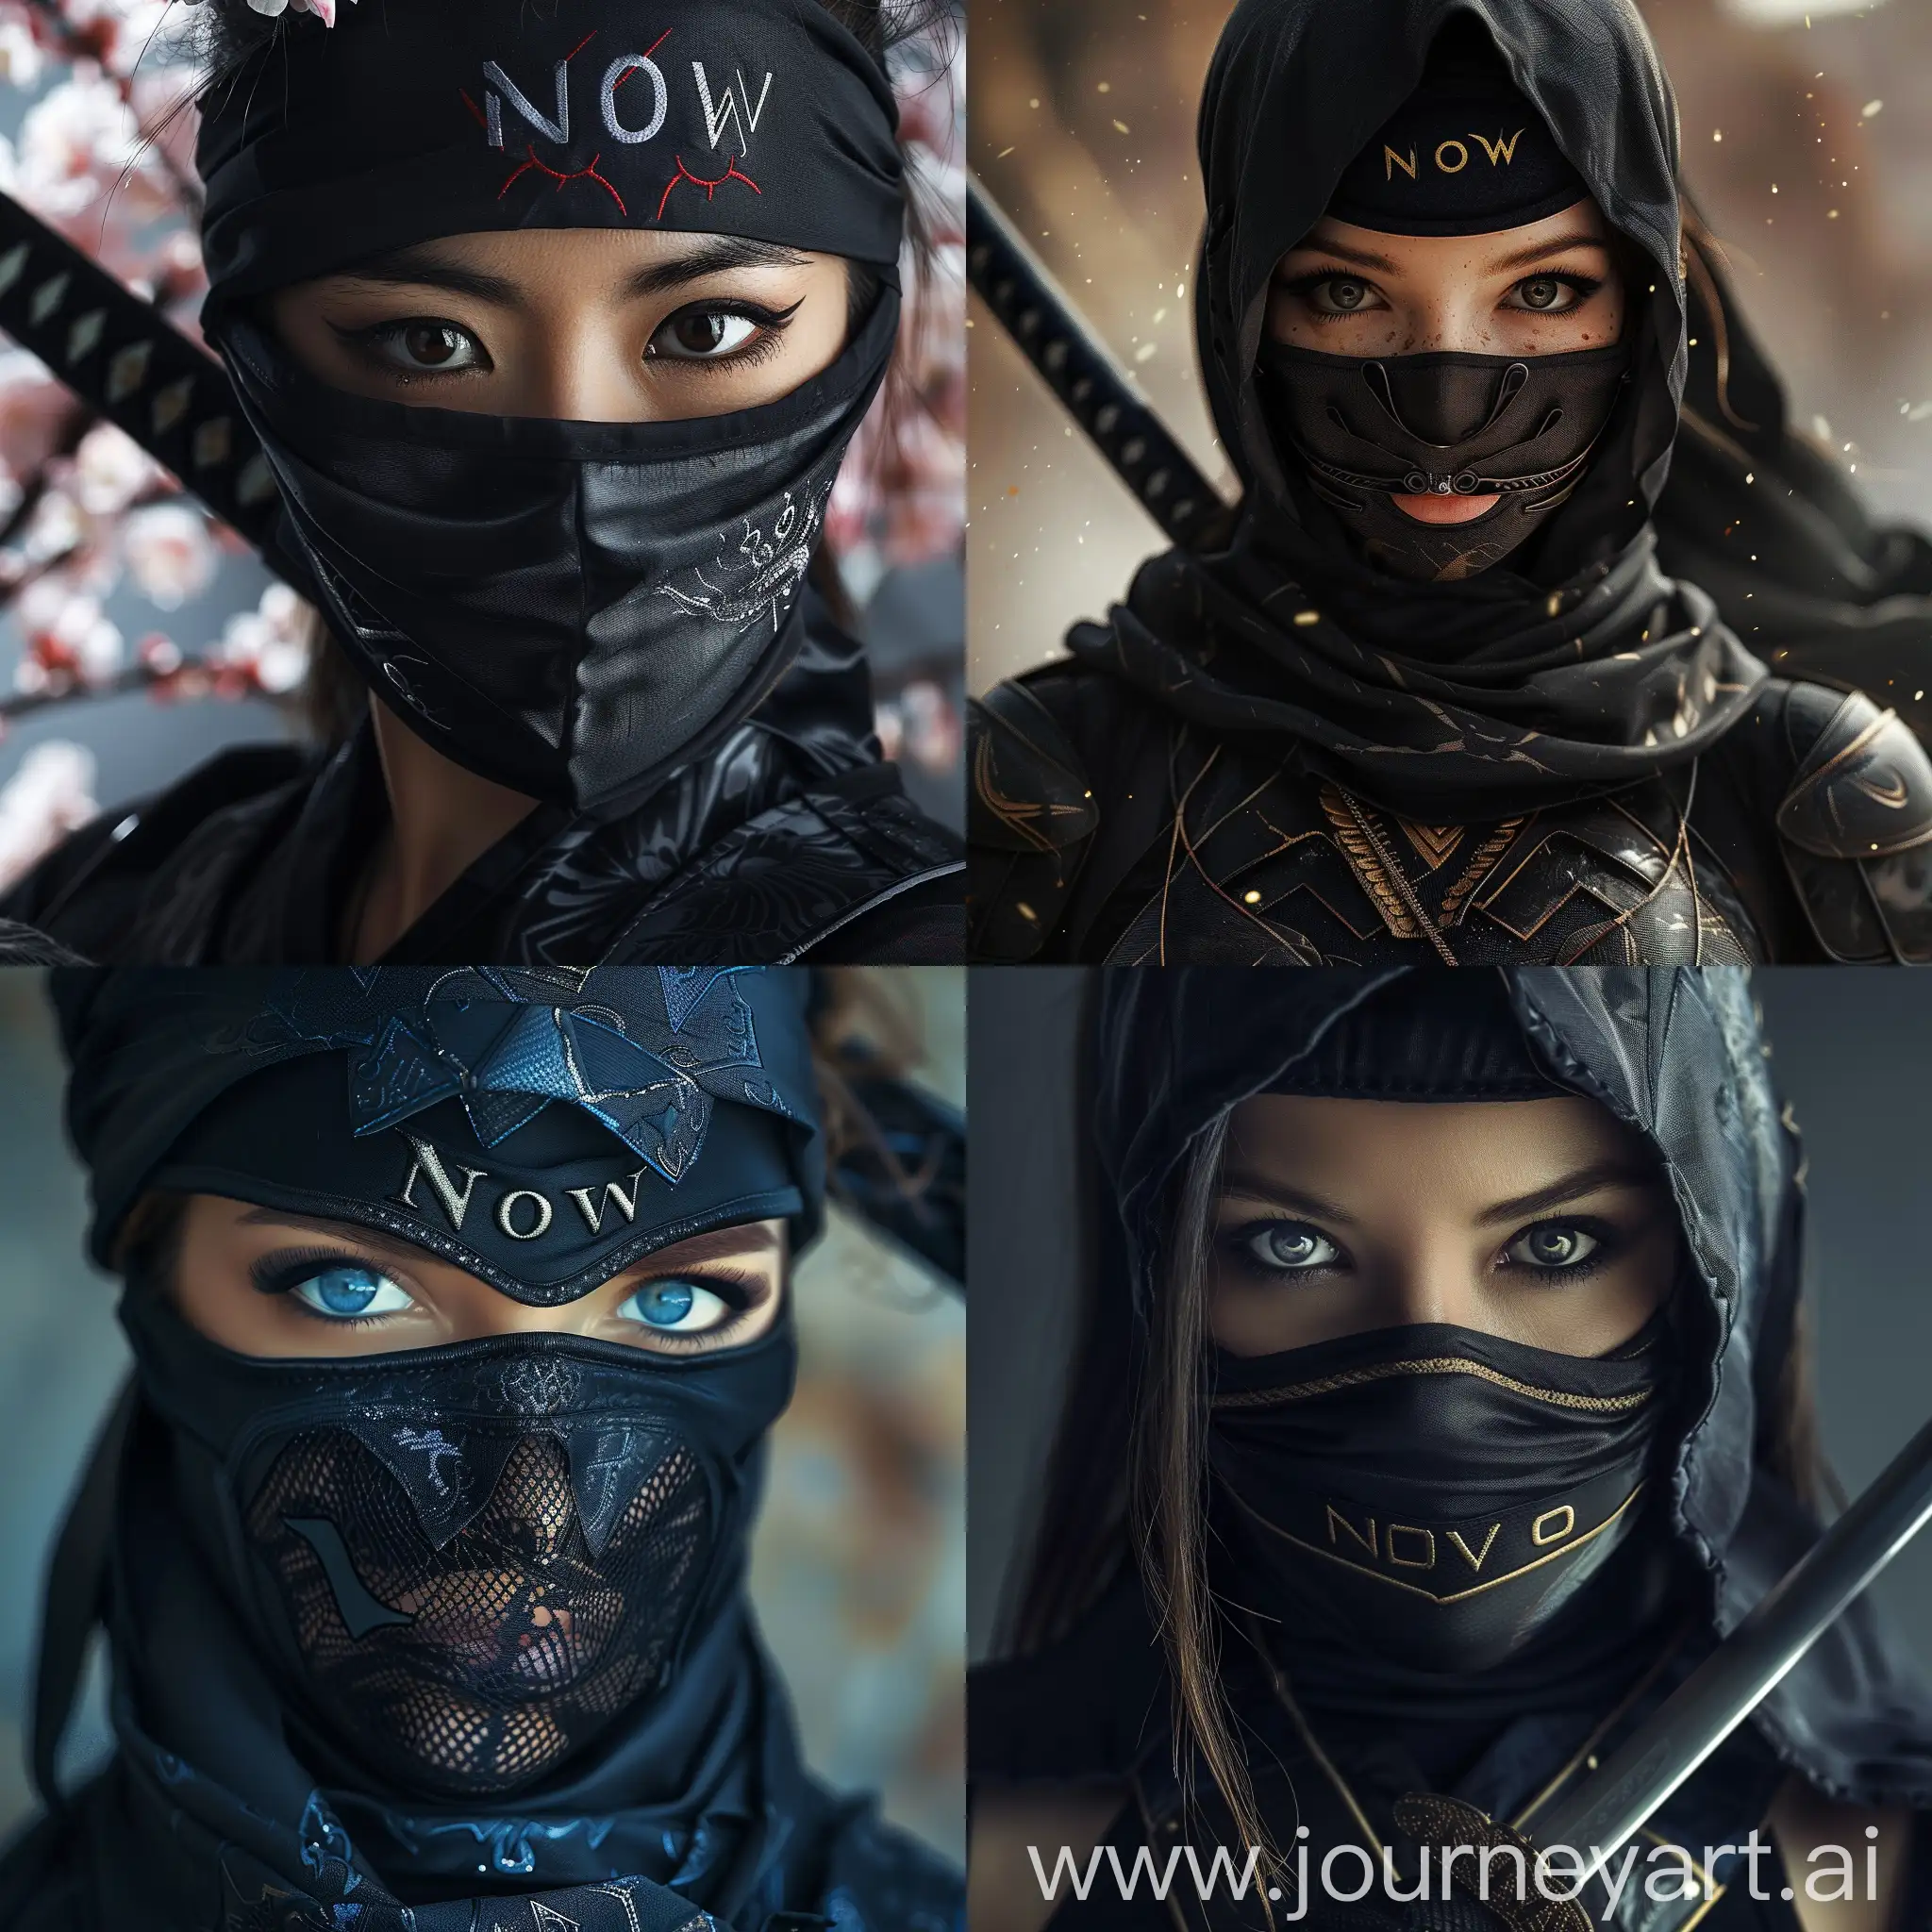  beautiful ninja woman with the NOVA written on her

